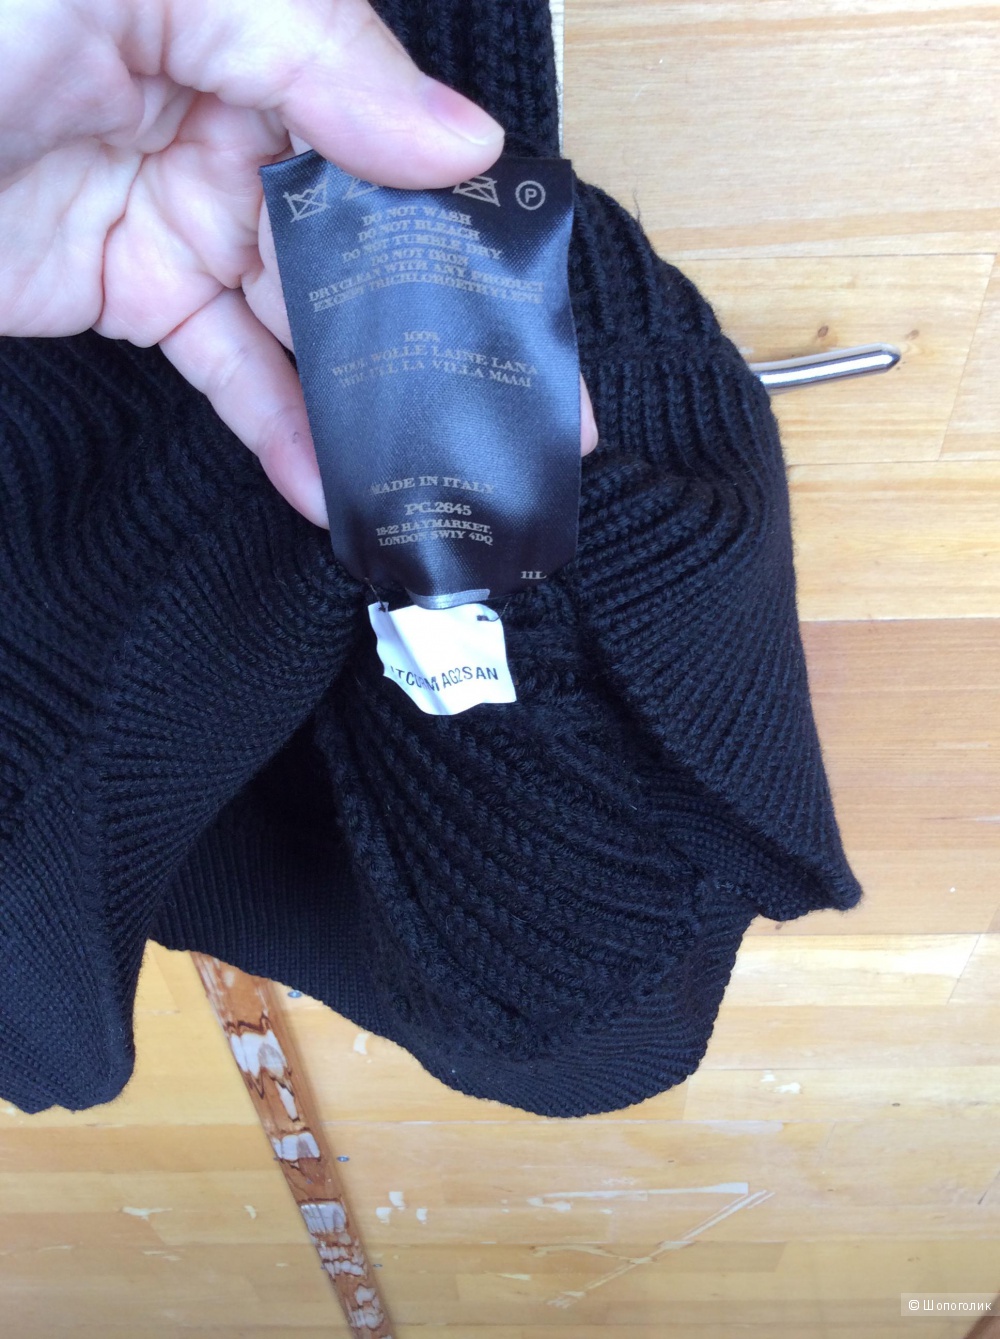 Топ-свитер Burberry размер S 100 шерсть